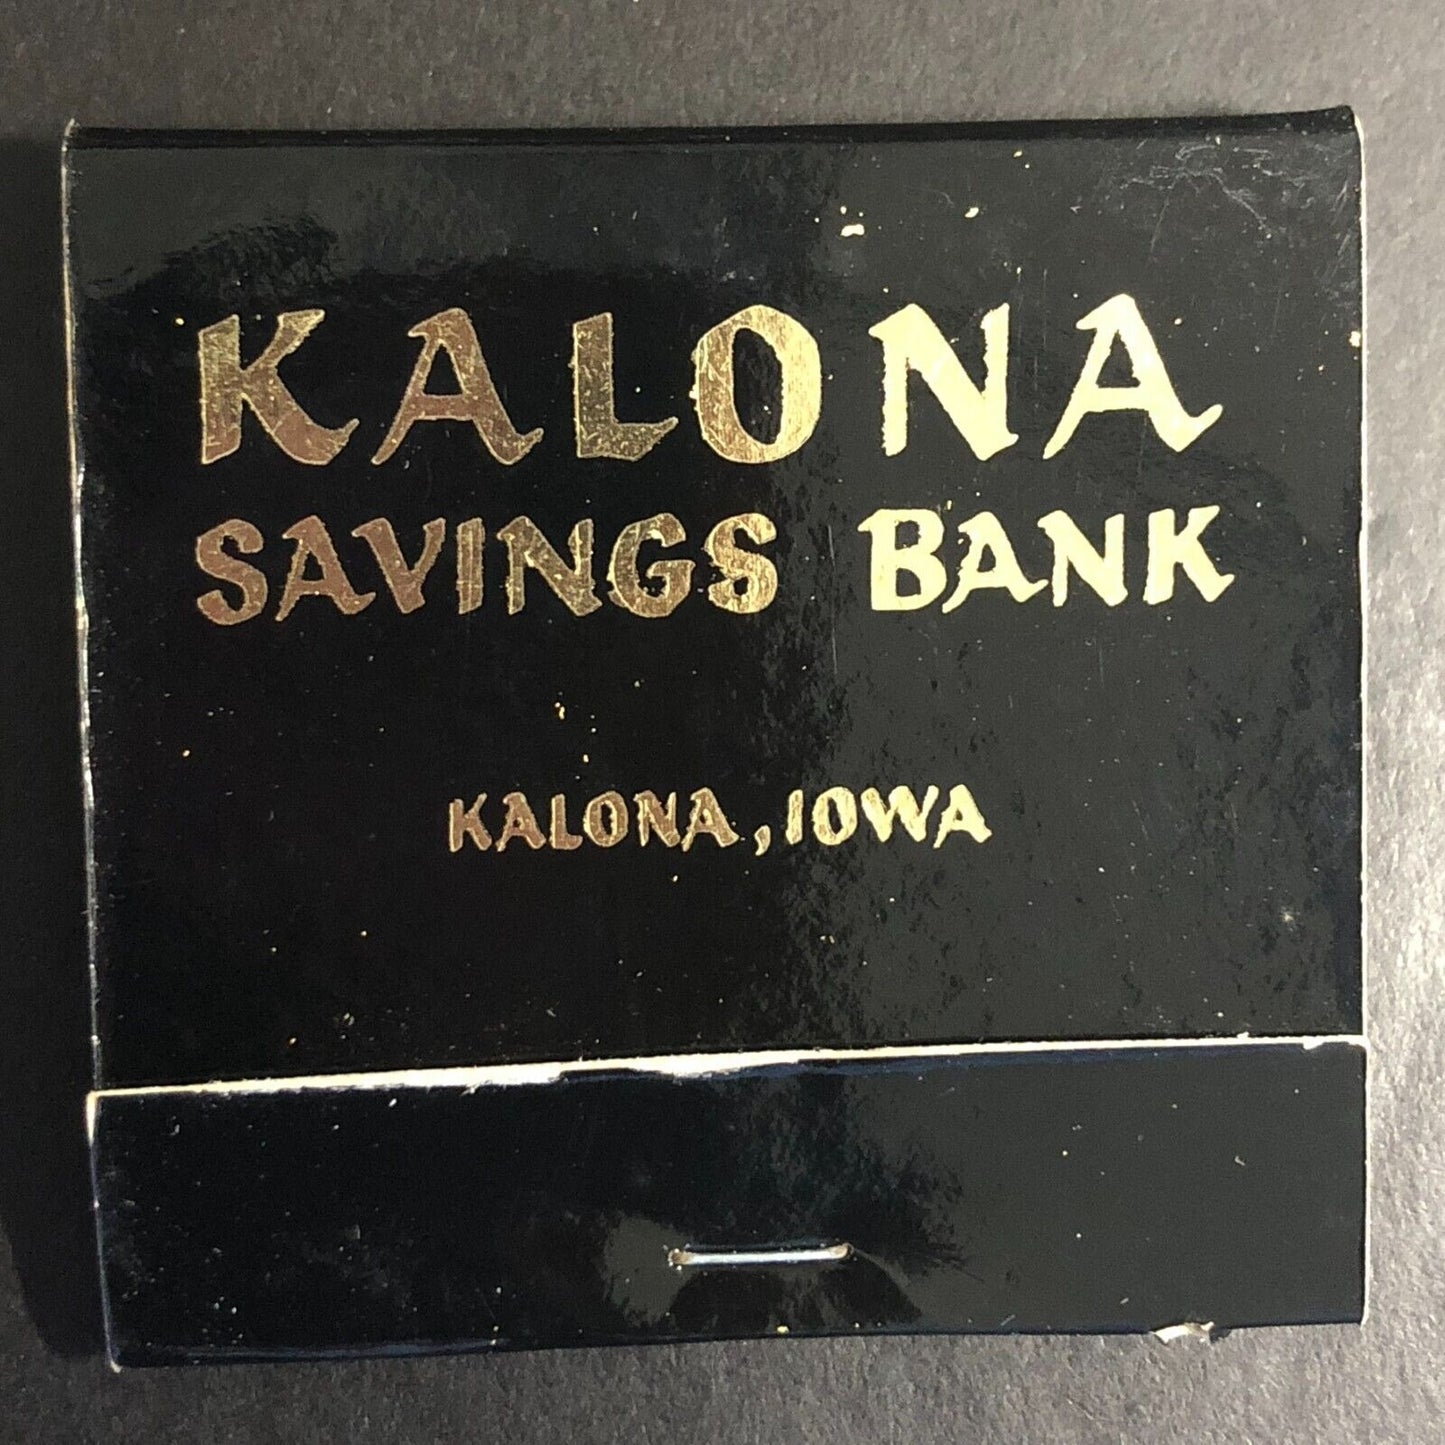 Kalona Savings Bank Kalona, Iowa Full Matchbook c1974-79 Gold Foil Text Scarce